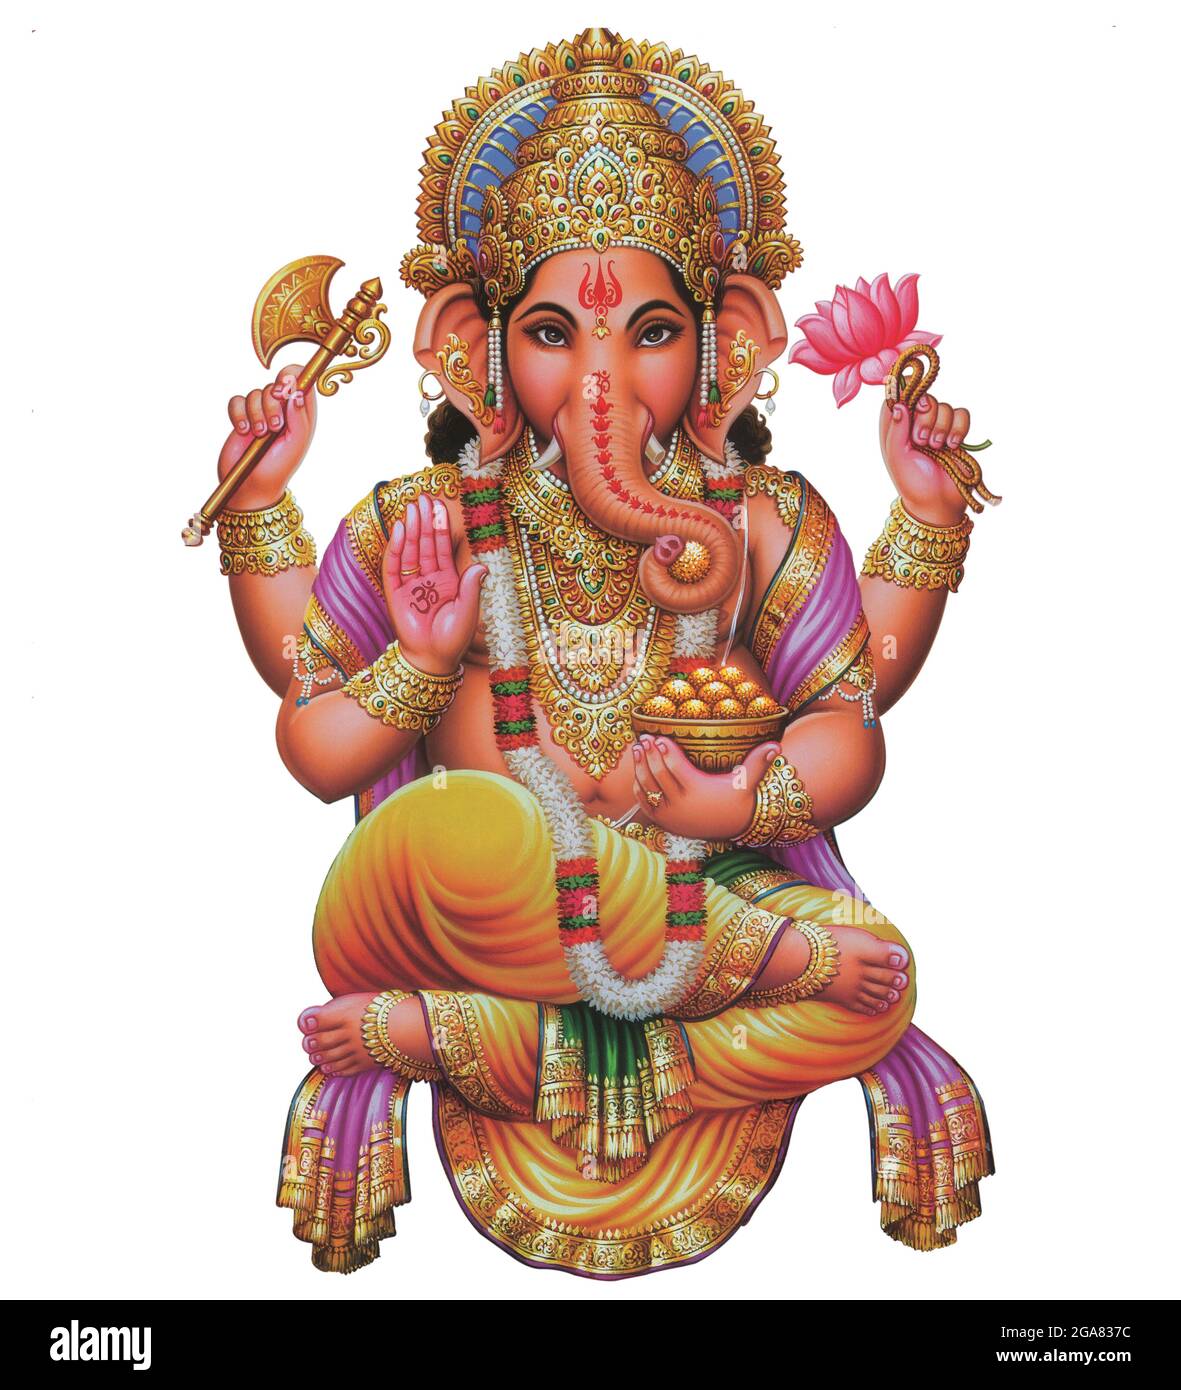 Dio indiano Ganesha, Signore indiano Ganesh, immagine mitologica indiana di  Ganesha Foto stock - Alamy